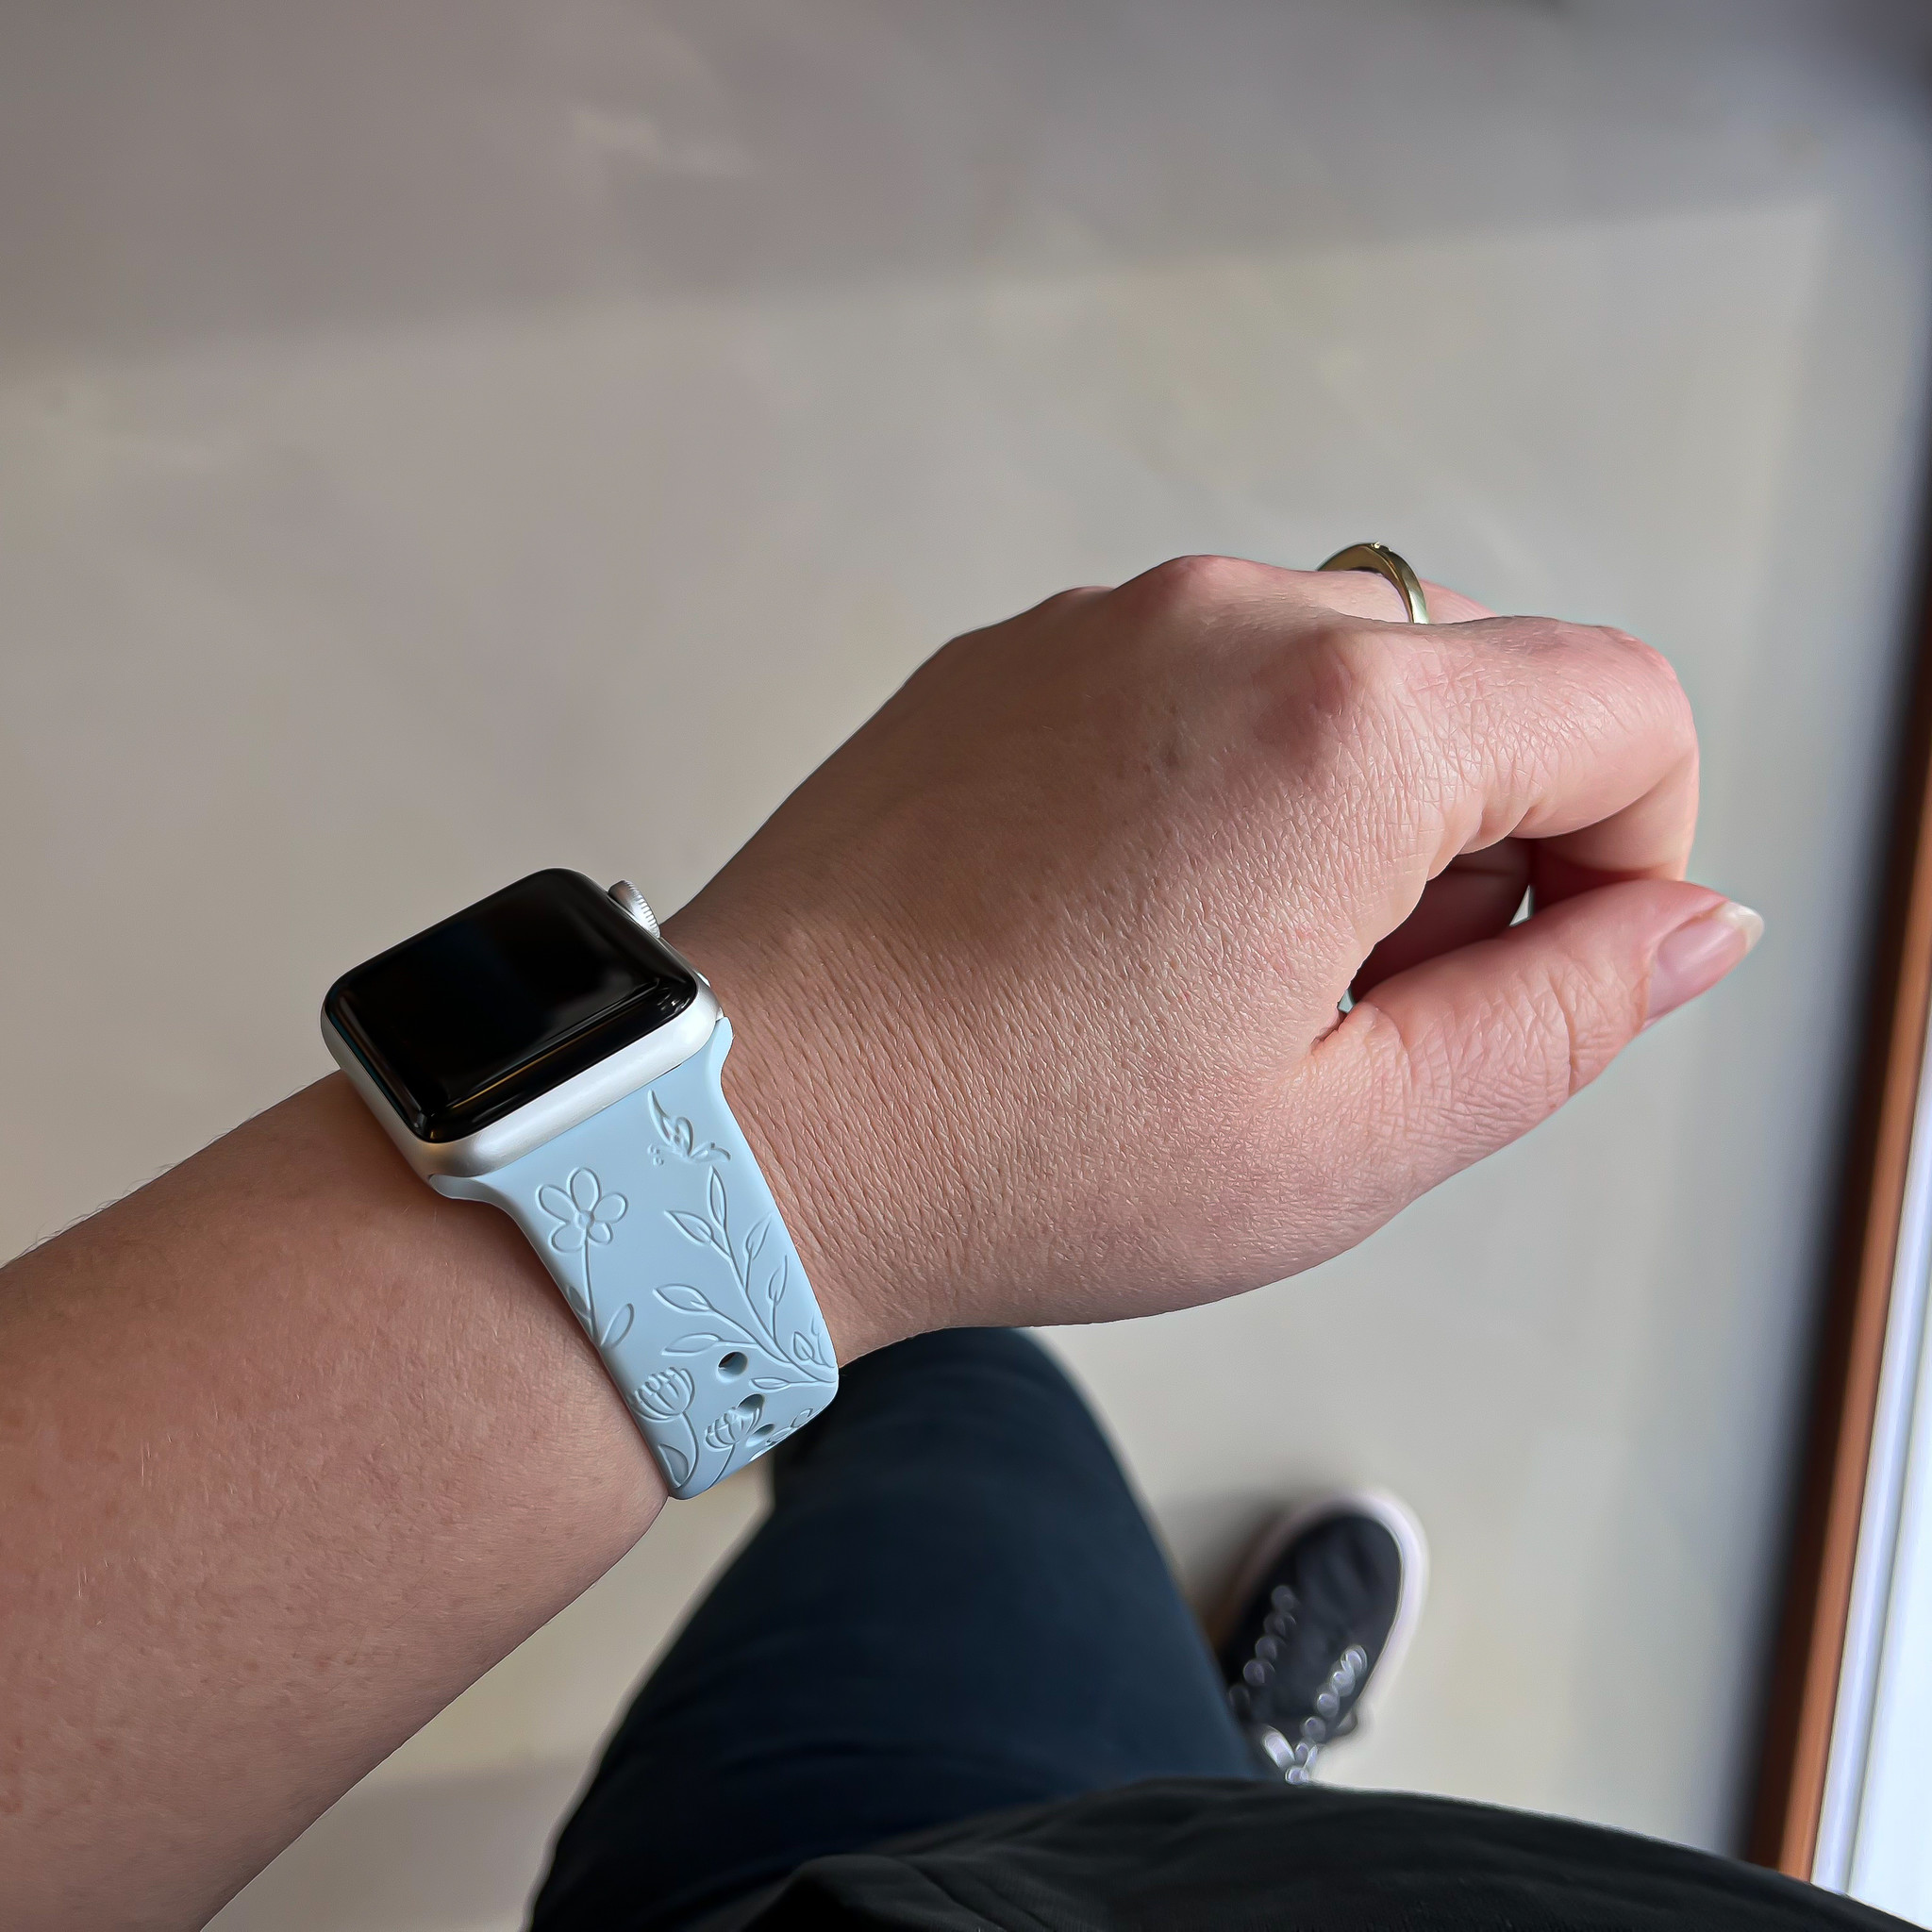 Cinturino sport con stampa per Apple Watch - blu floreale